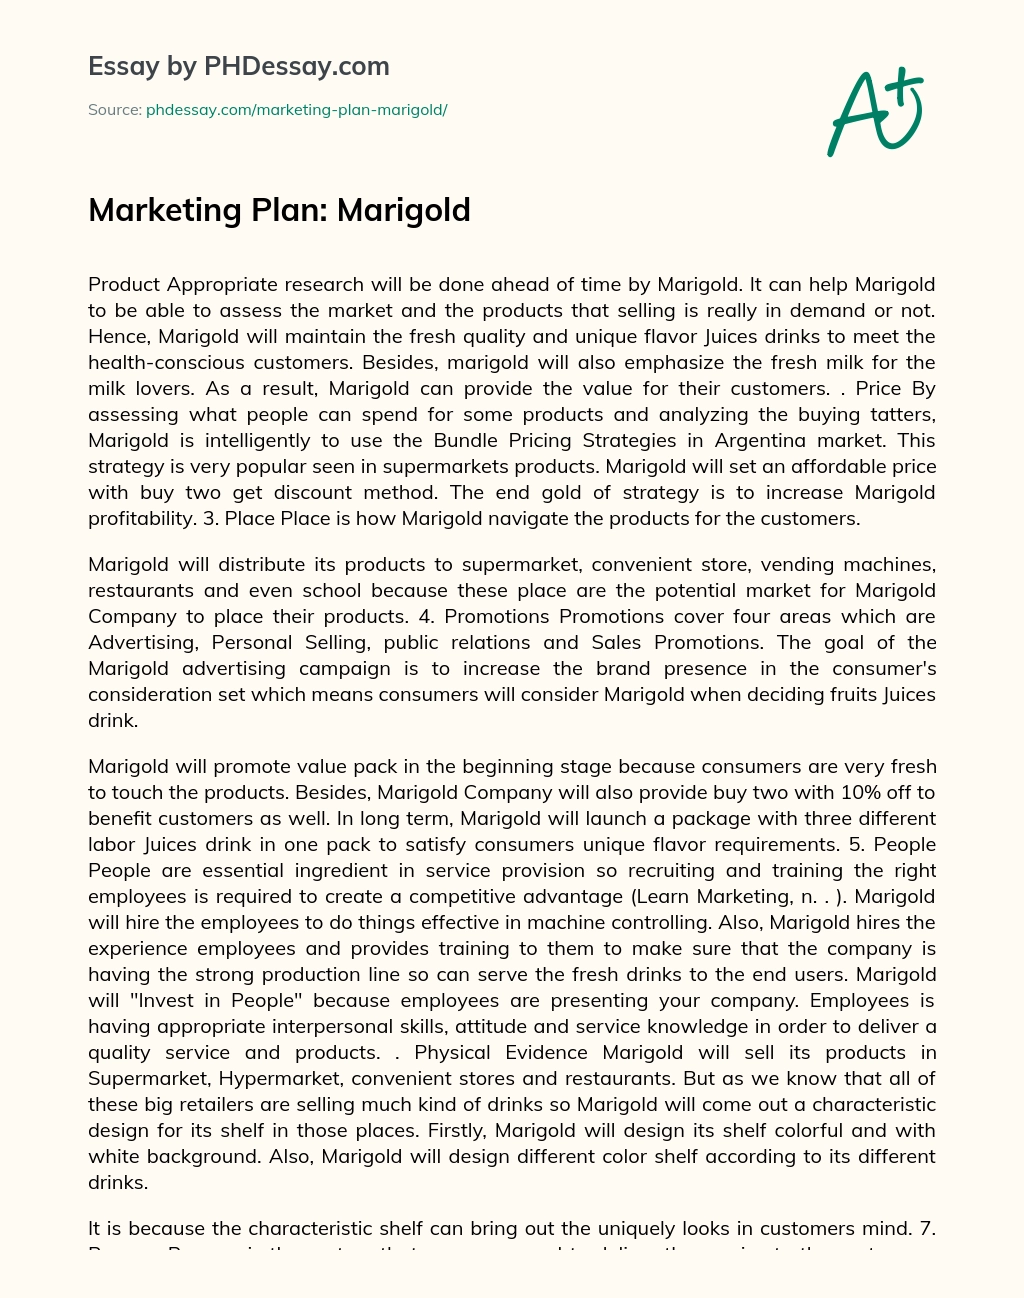 Marketing Plan: Marigold essay